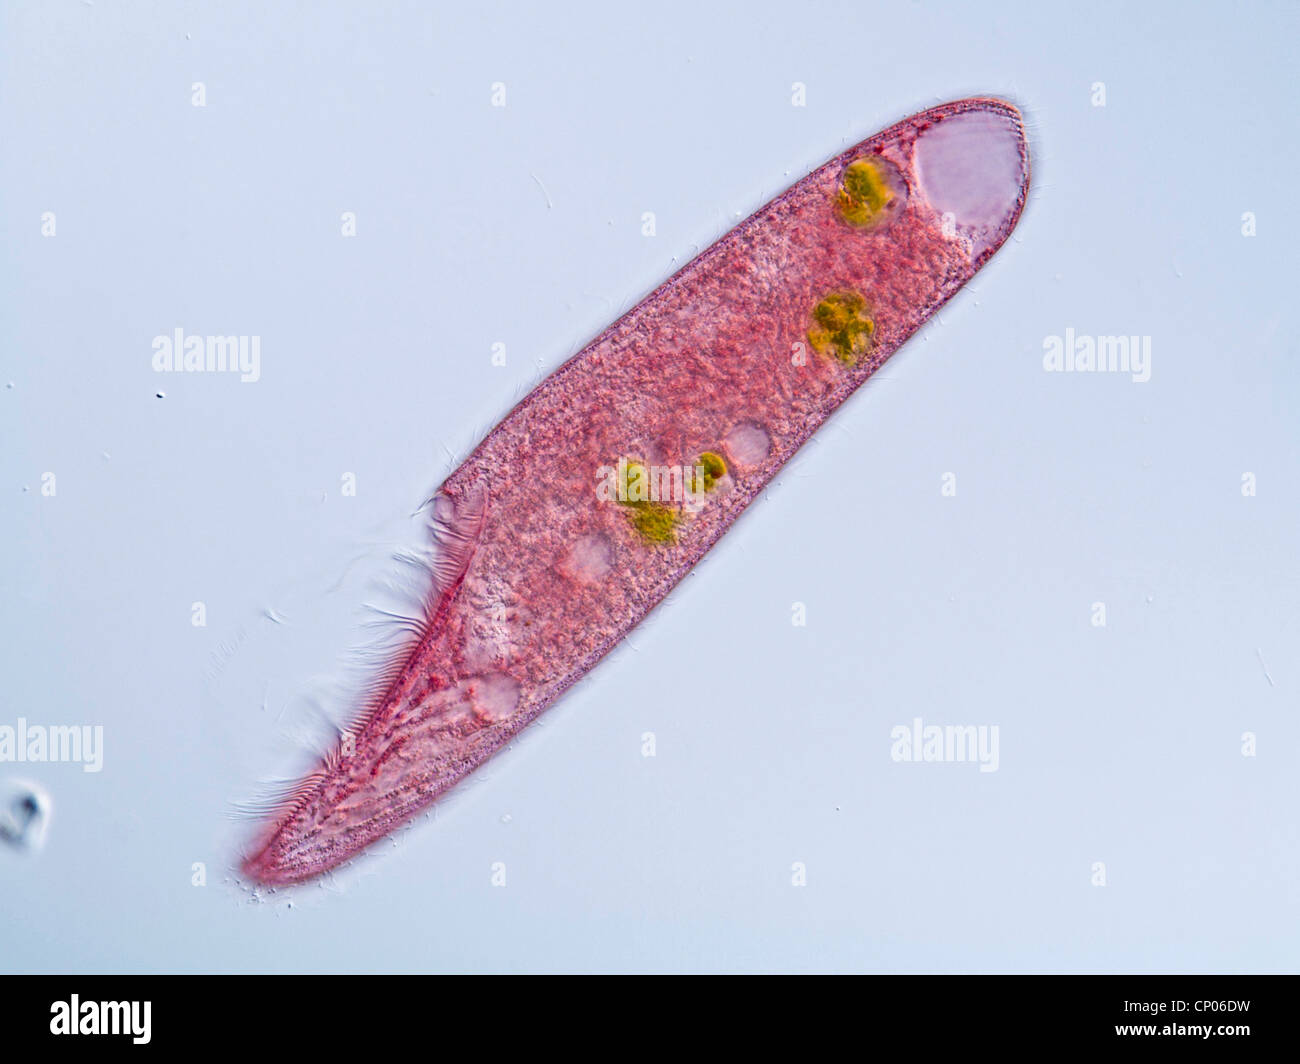 Blepharisma americana (Blepharisma americana), pink ciliate feeding on green algae, Germany Stock Photo